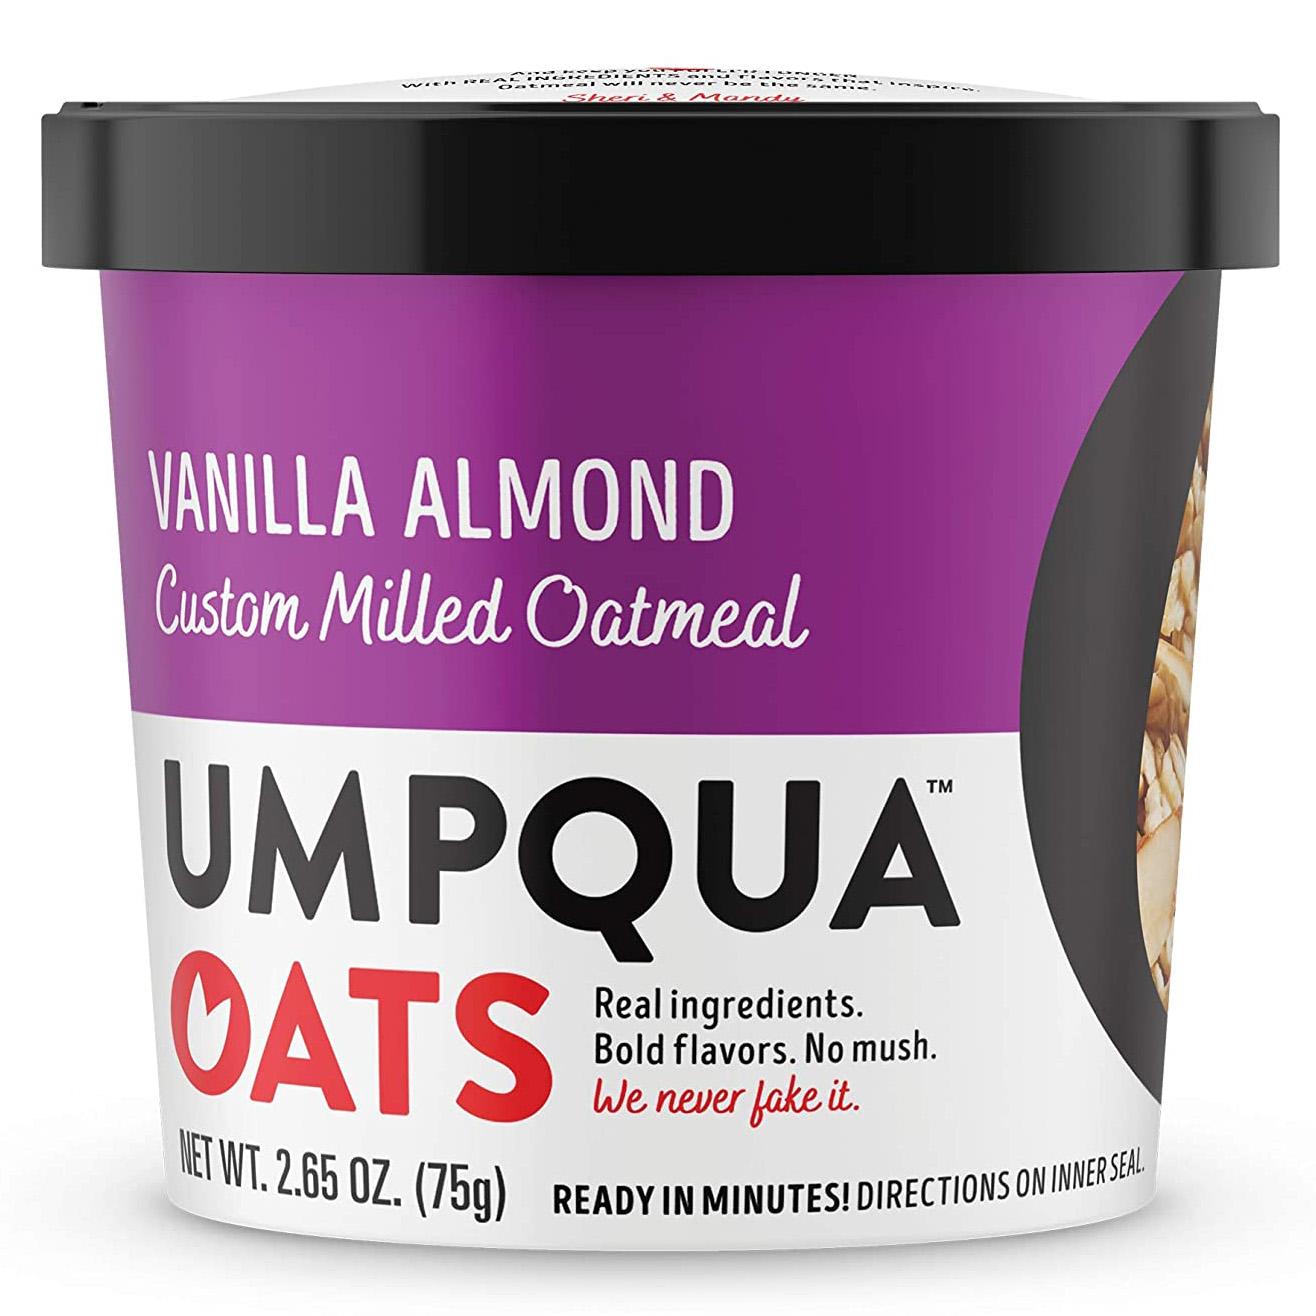 8 Umpqua Oats All Natural Oatmeal Cups for $3.99 Shipped